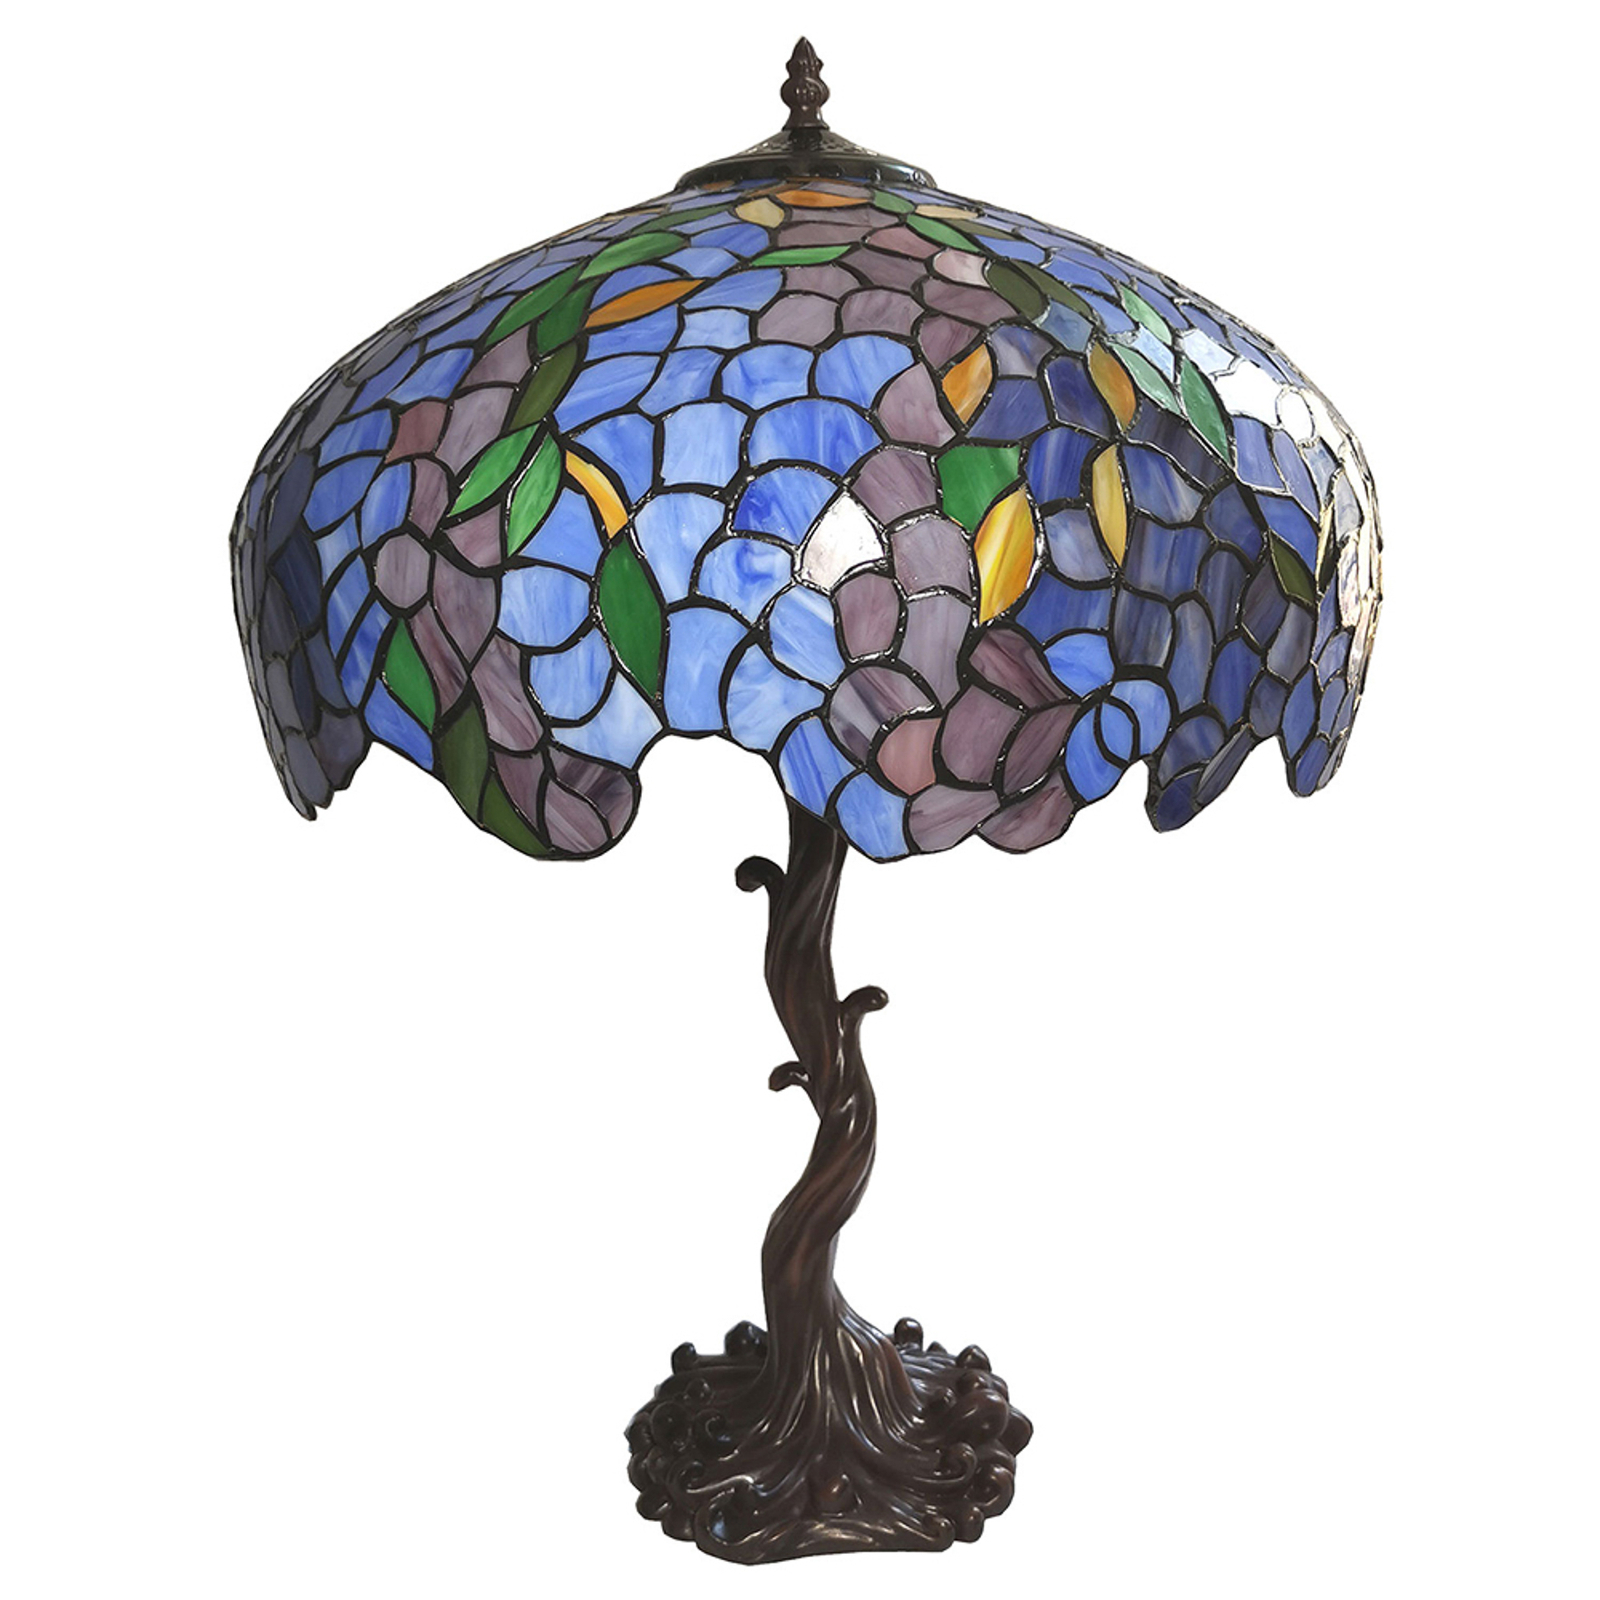 Lampe à poser 5LL-6070 bleue/verte, style Tiffany